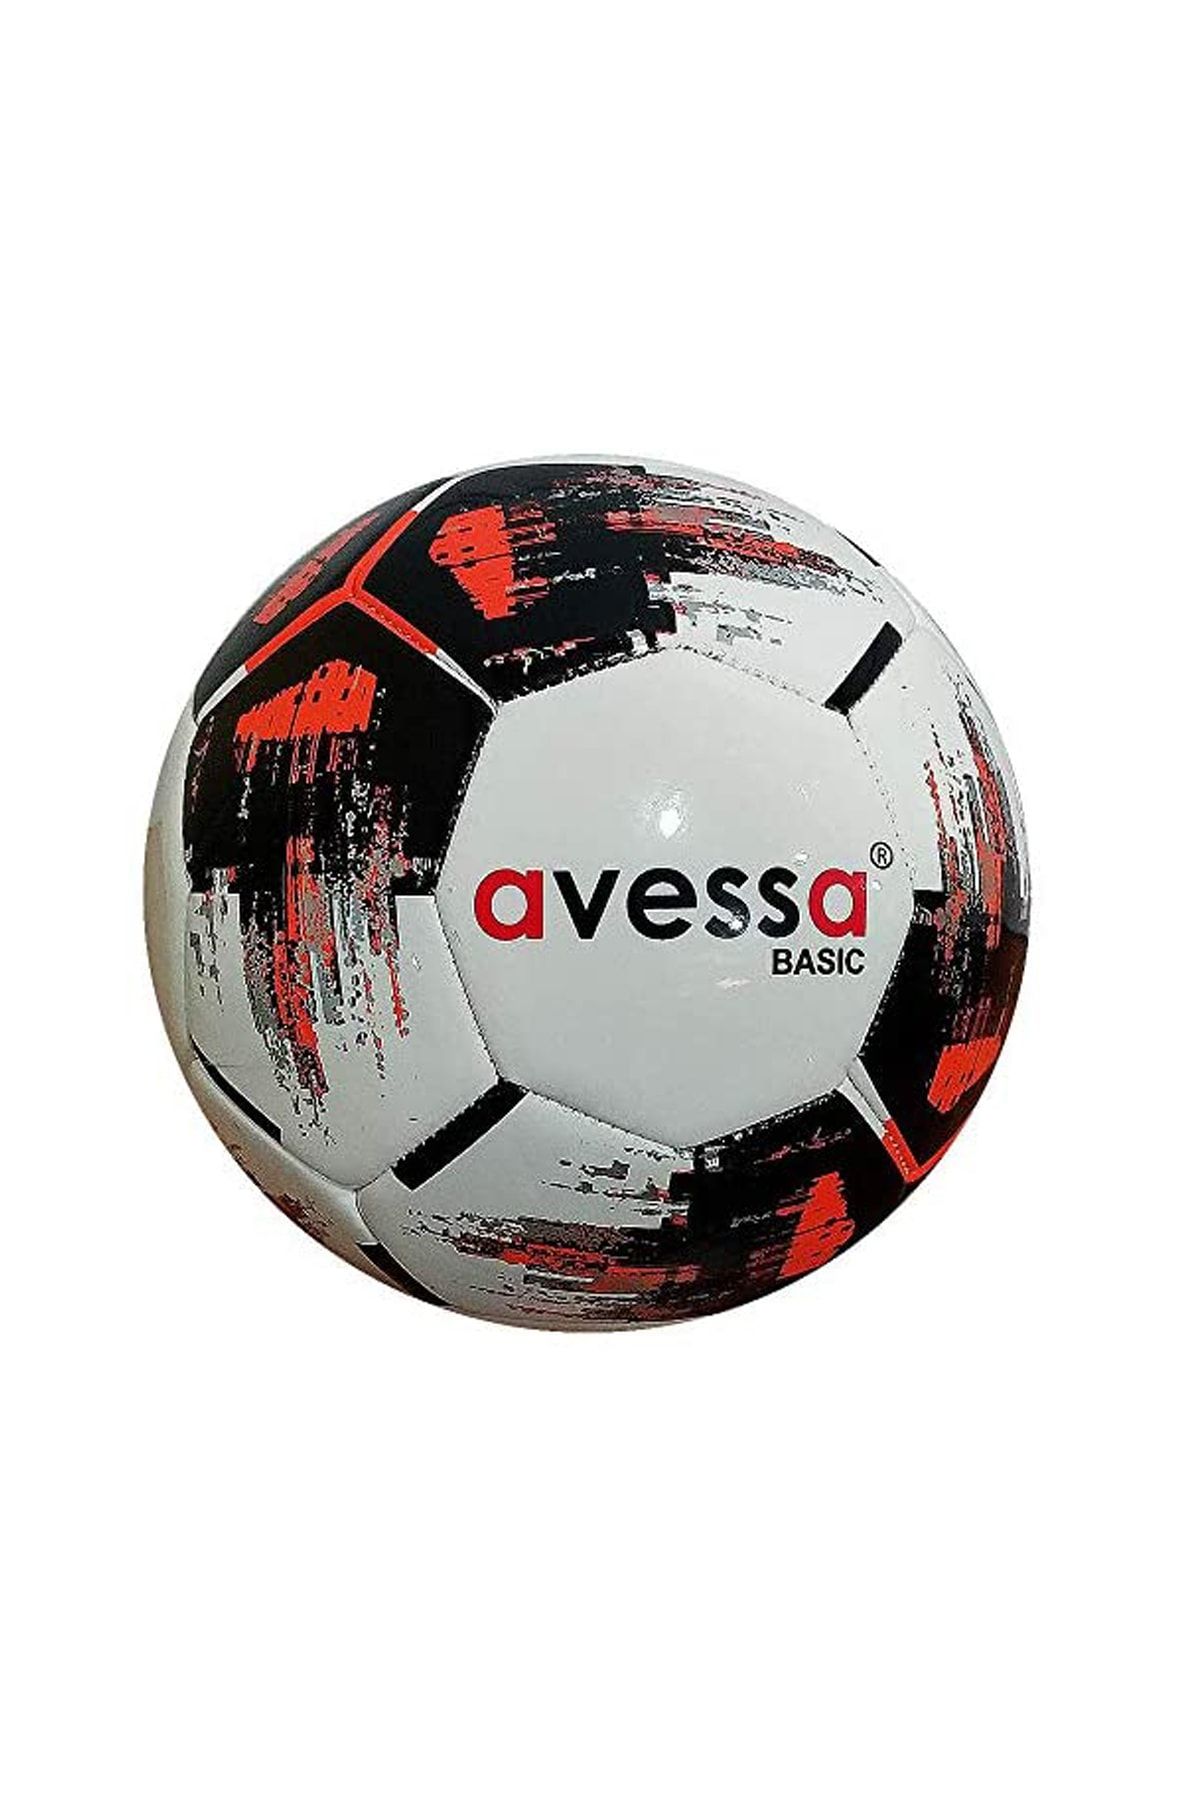 Avessa Basic 4 Numaralı Futbol Topu Kırmızı